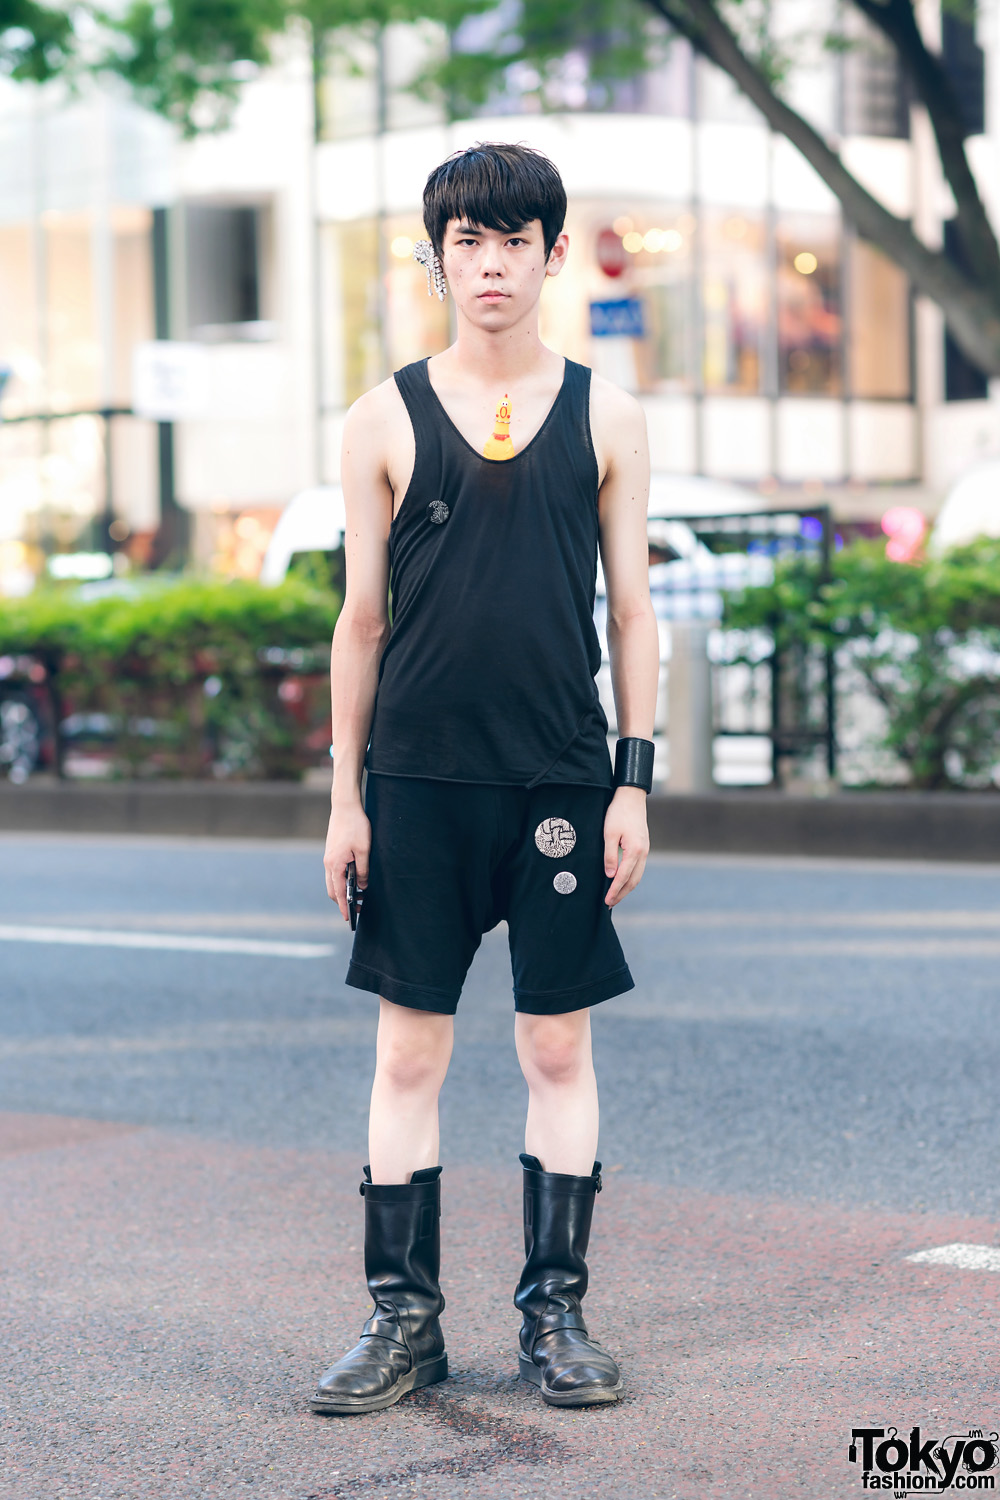 Stylish Japanese Menswear Style w/ Christopher Nemeth Two-Tone Jacket,  Leather Pants, Maison Margiela Boots & Printed Tote – Tokyo Fashion